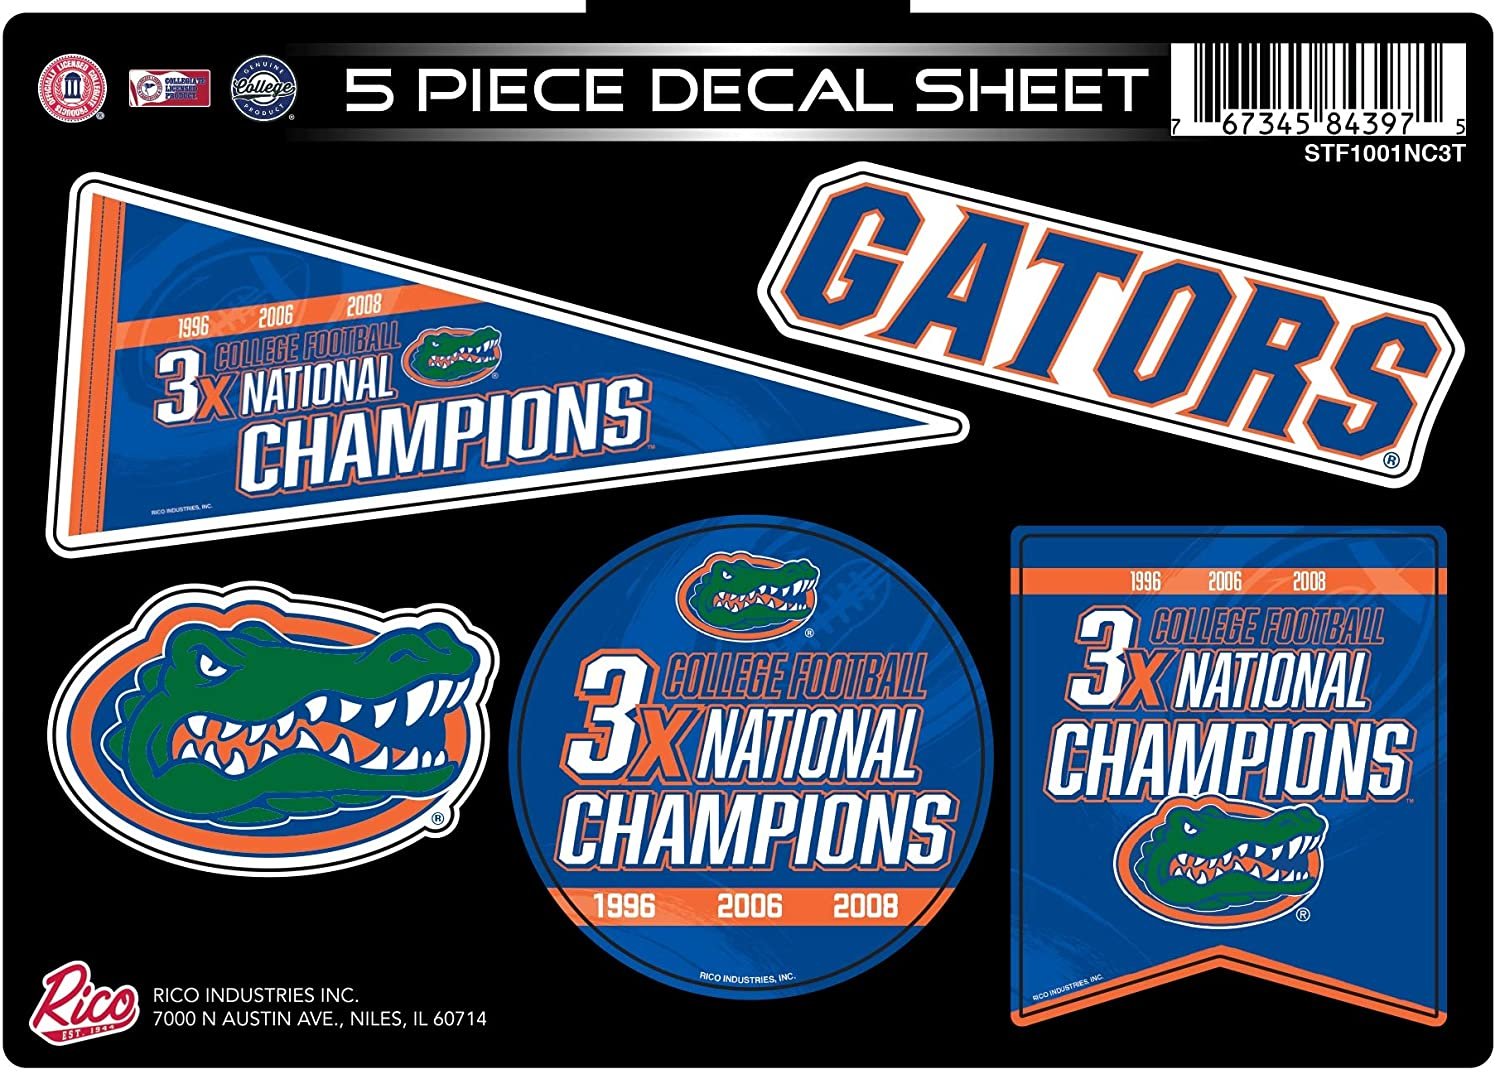 Florida Gators Decal Sticker Sheet 3X Time Champions 5 Piece Multi Flat Vinyl Emblem College Football University of